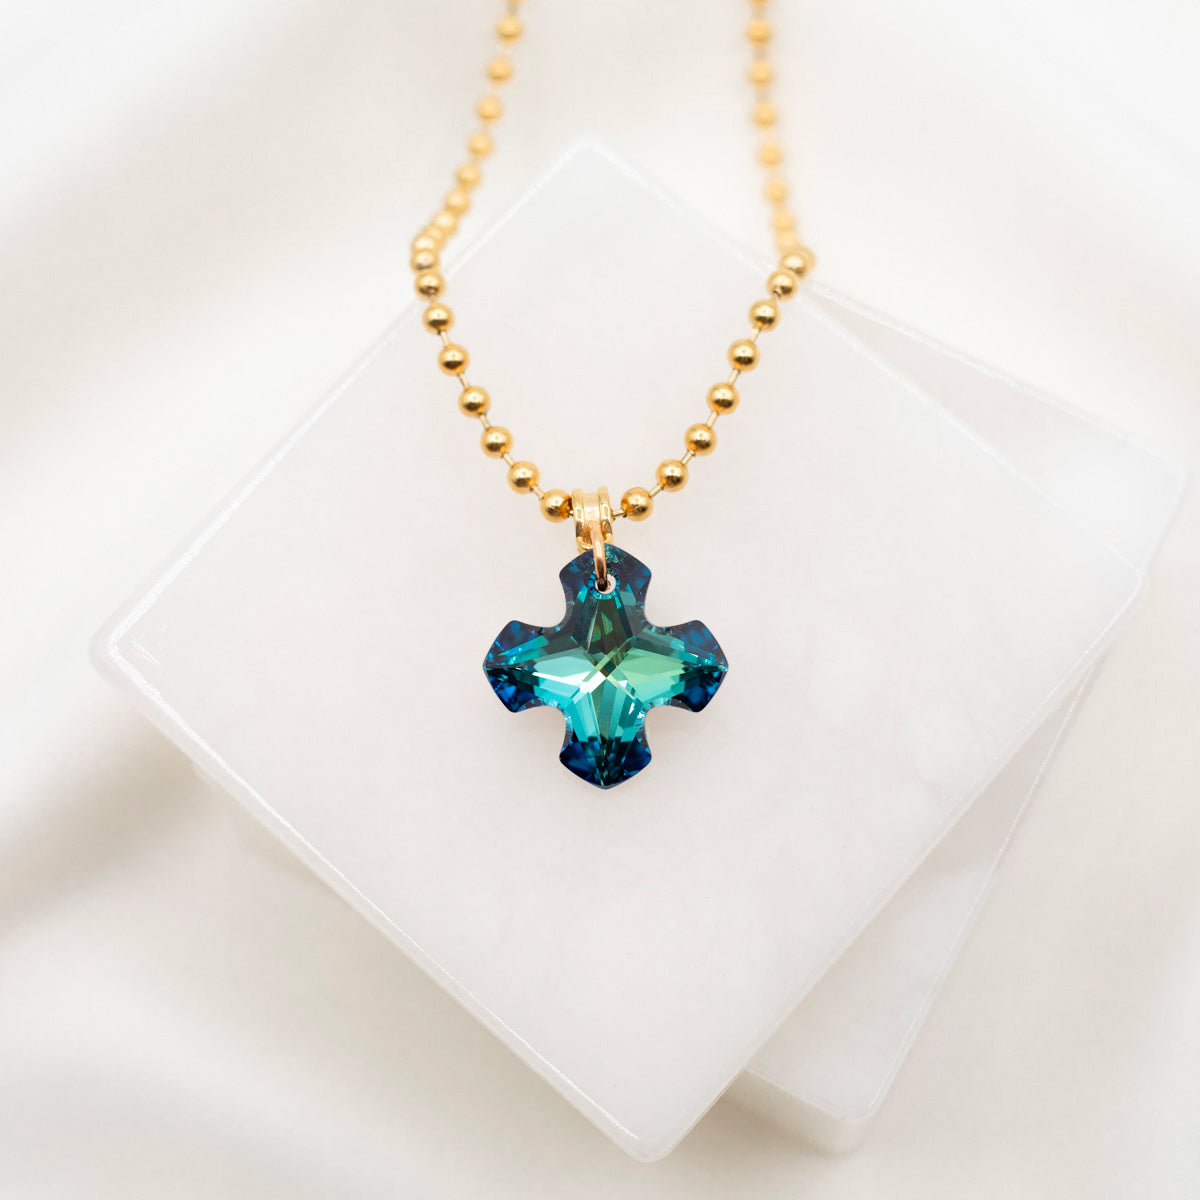 Swarovski Cross Necklace - jewelry - by owner - sale - craigslist